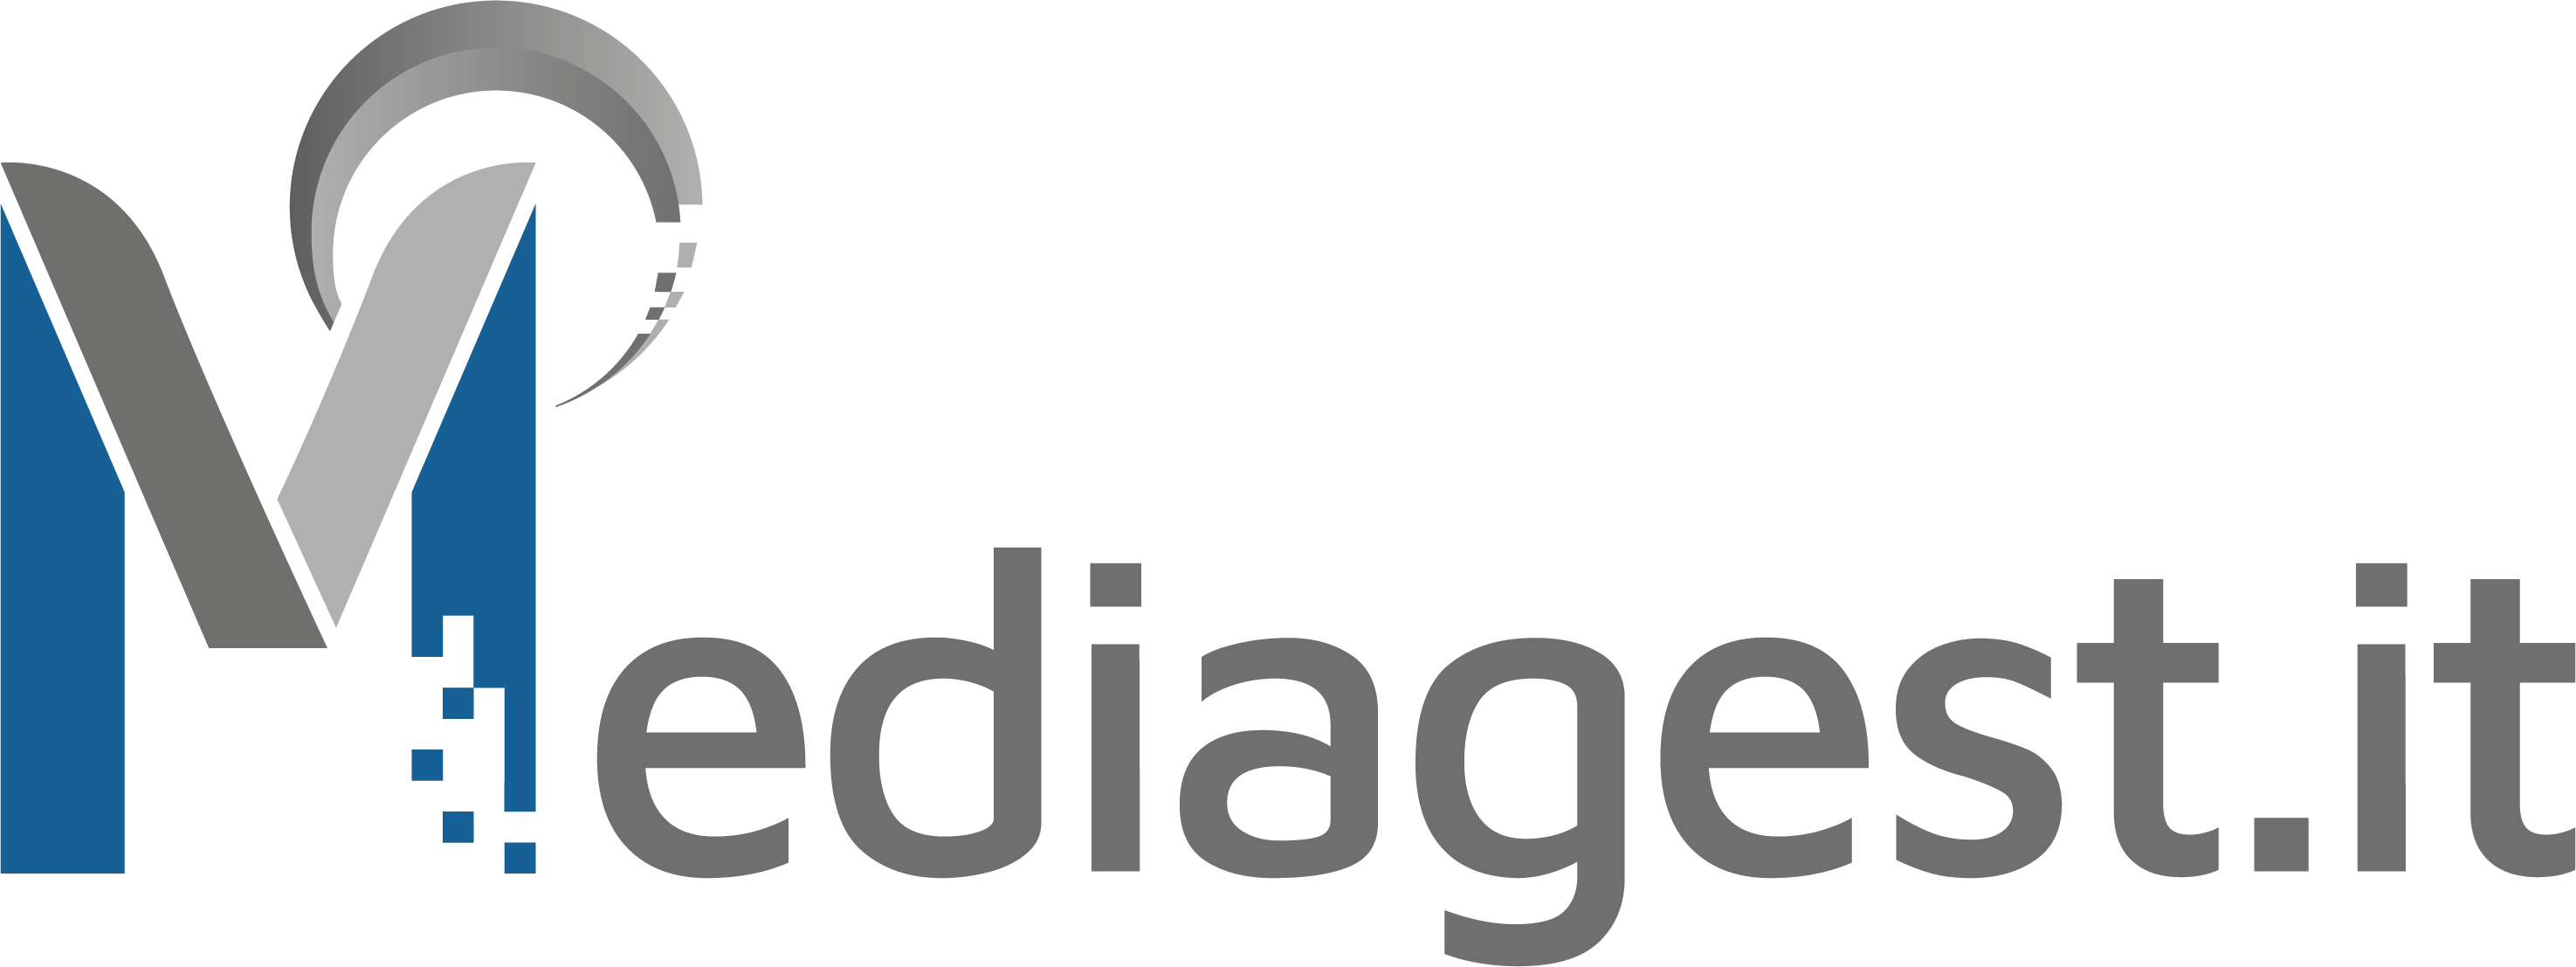 logo mediagest